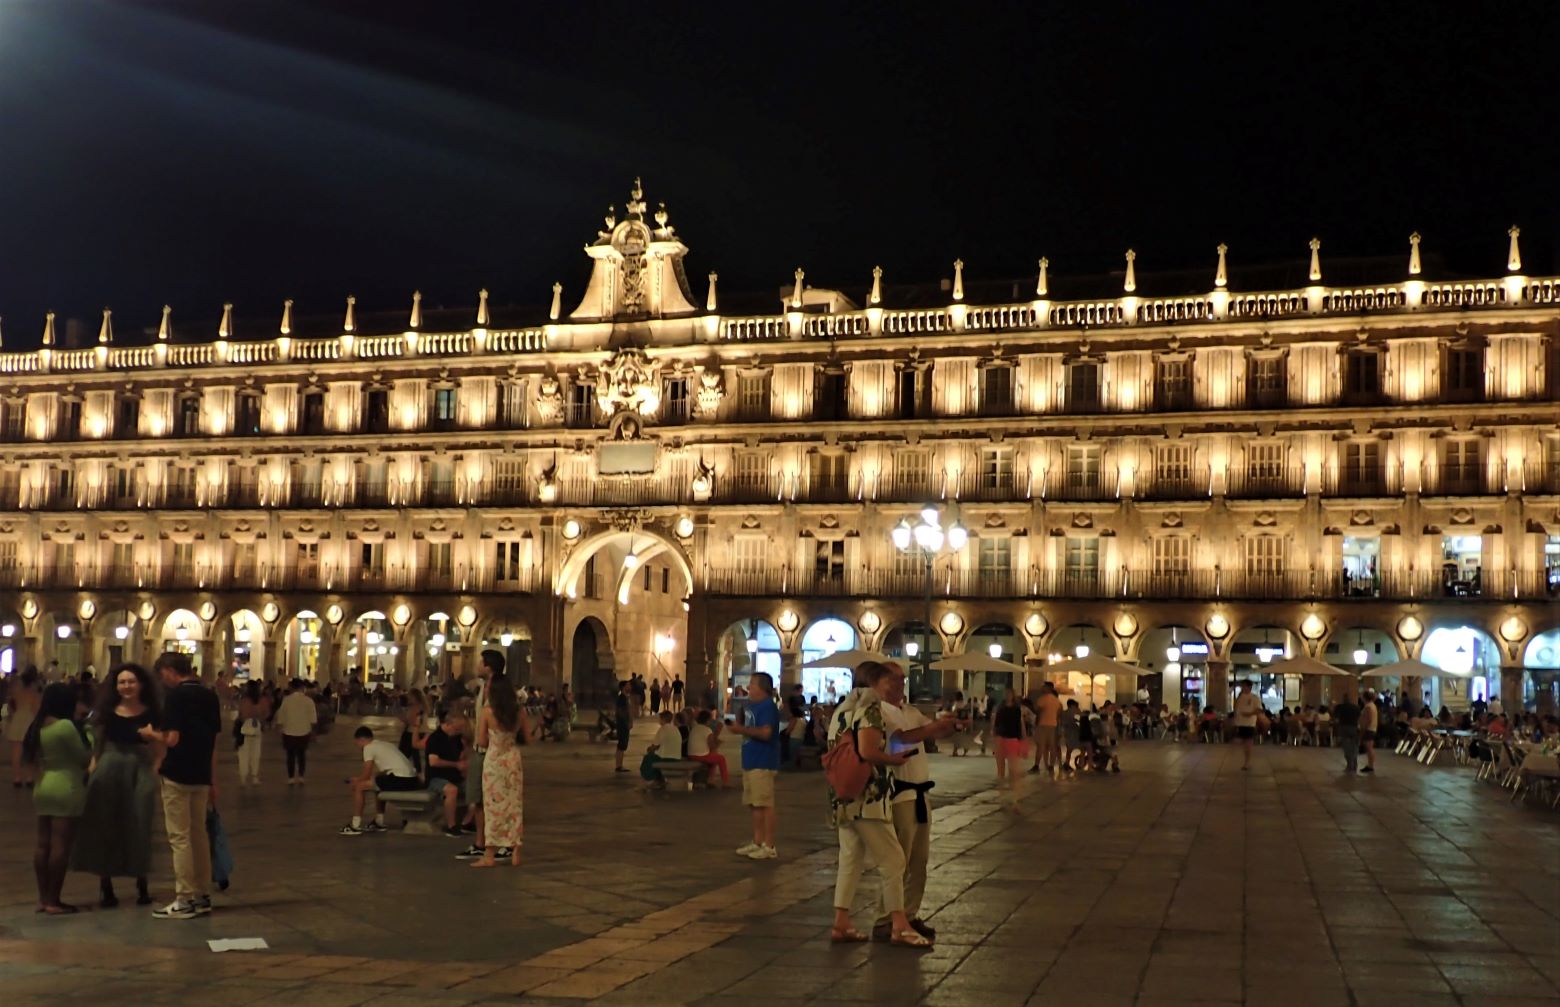 Top things to see in Salamanca, Spain: The Plaza Major illuminated at night